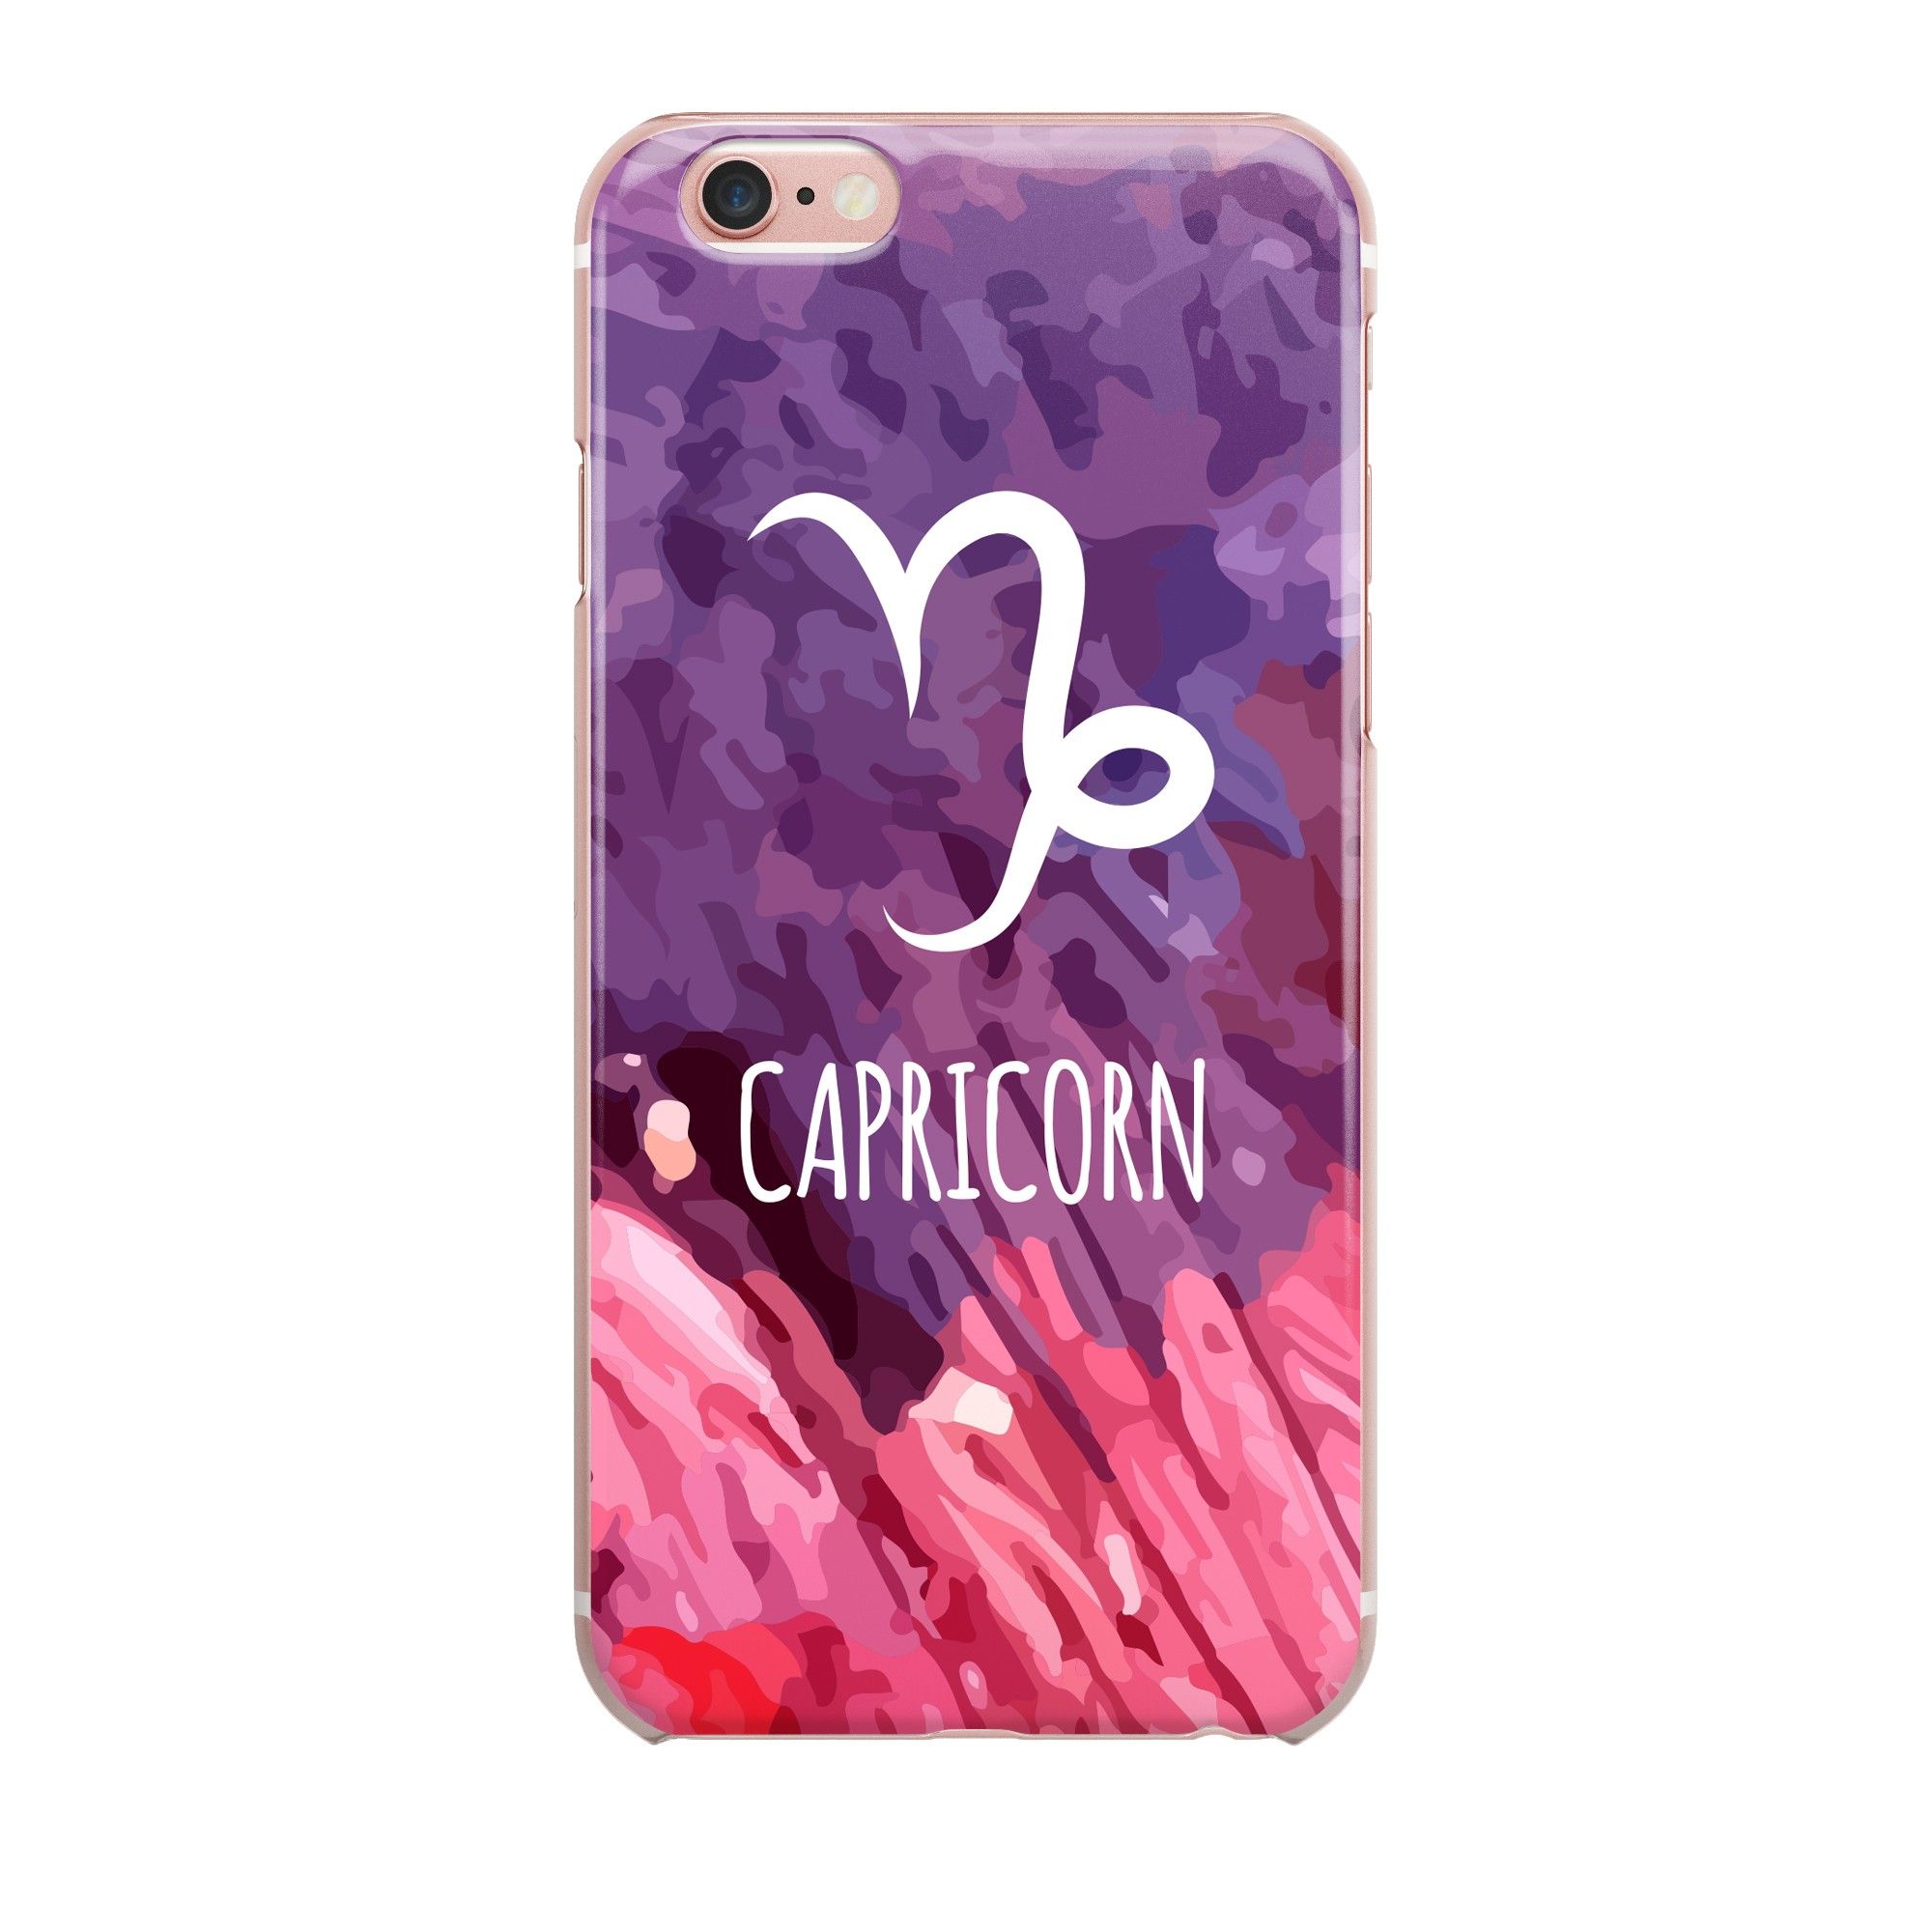  Capricorn - Iphone 6 